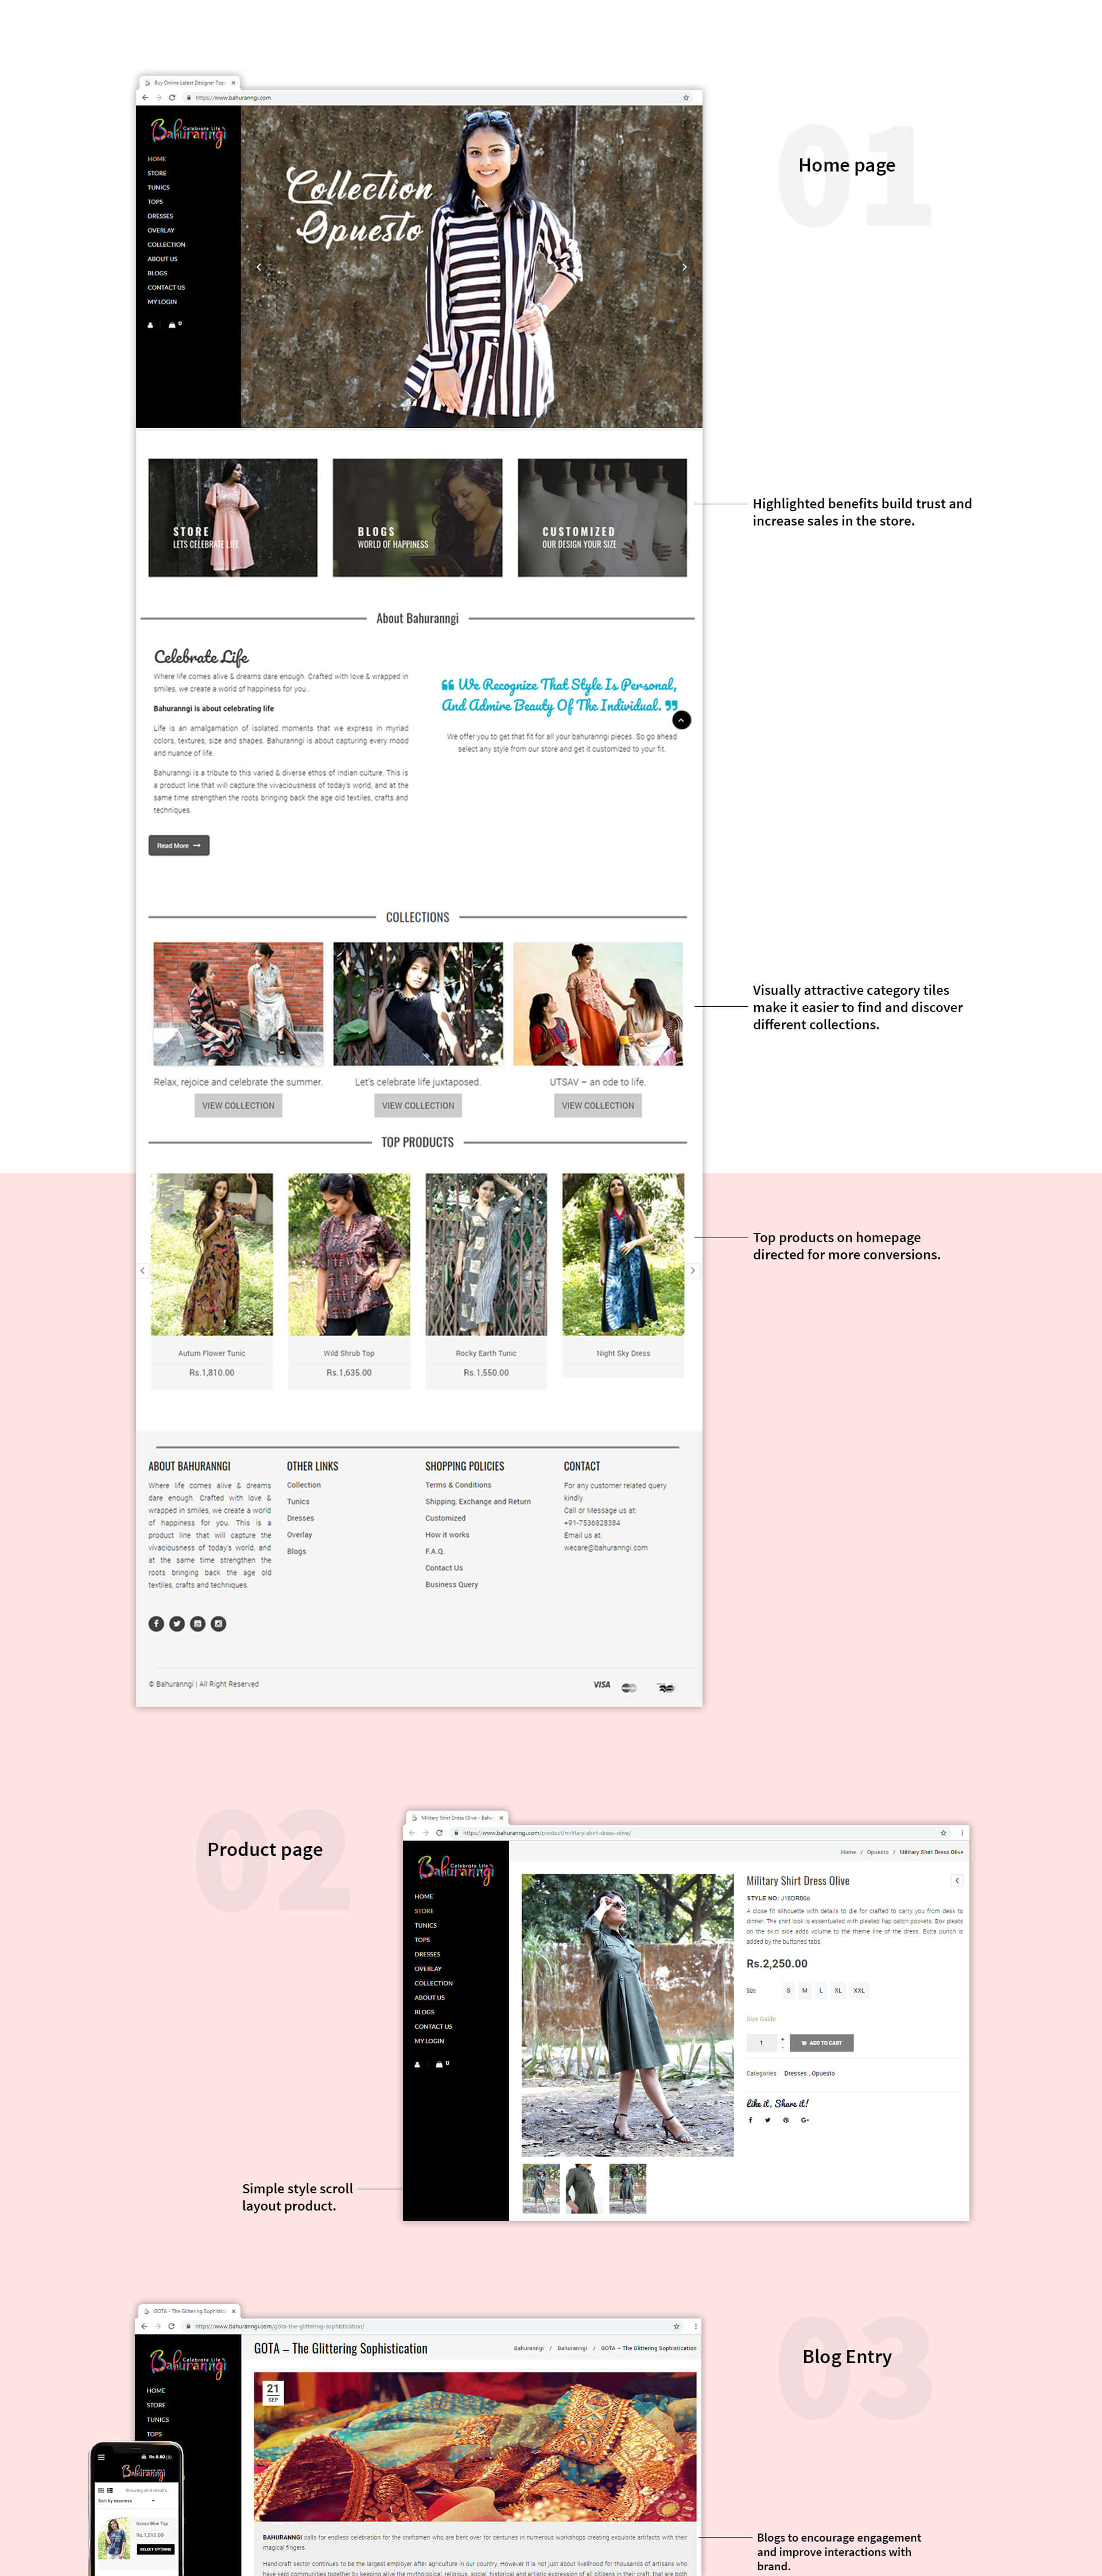 ecommerce website design services in dehradun